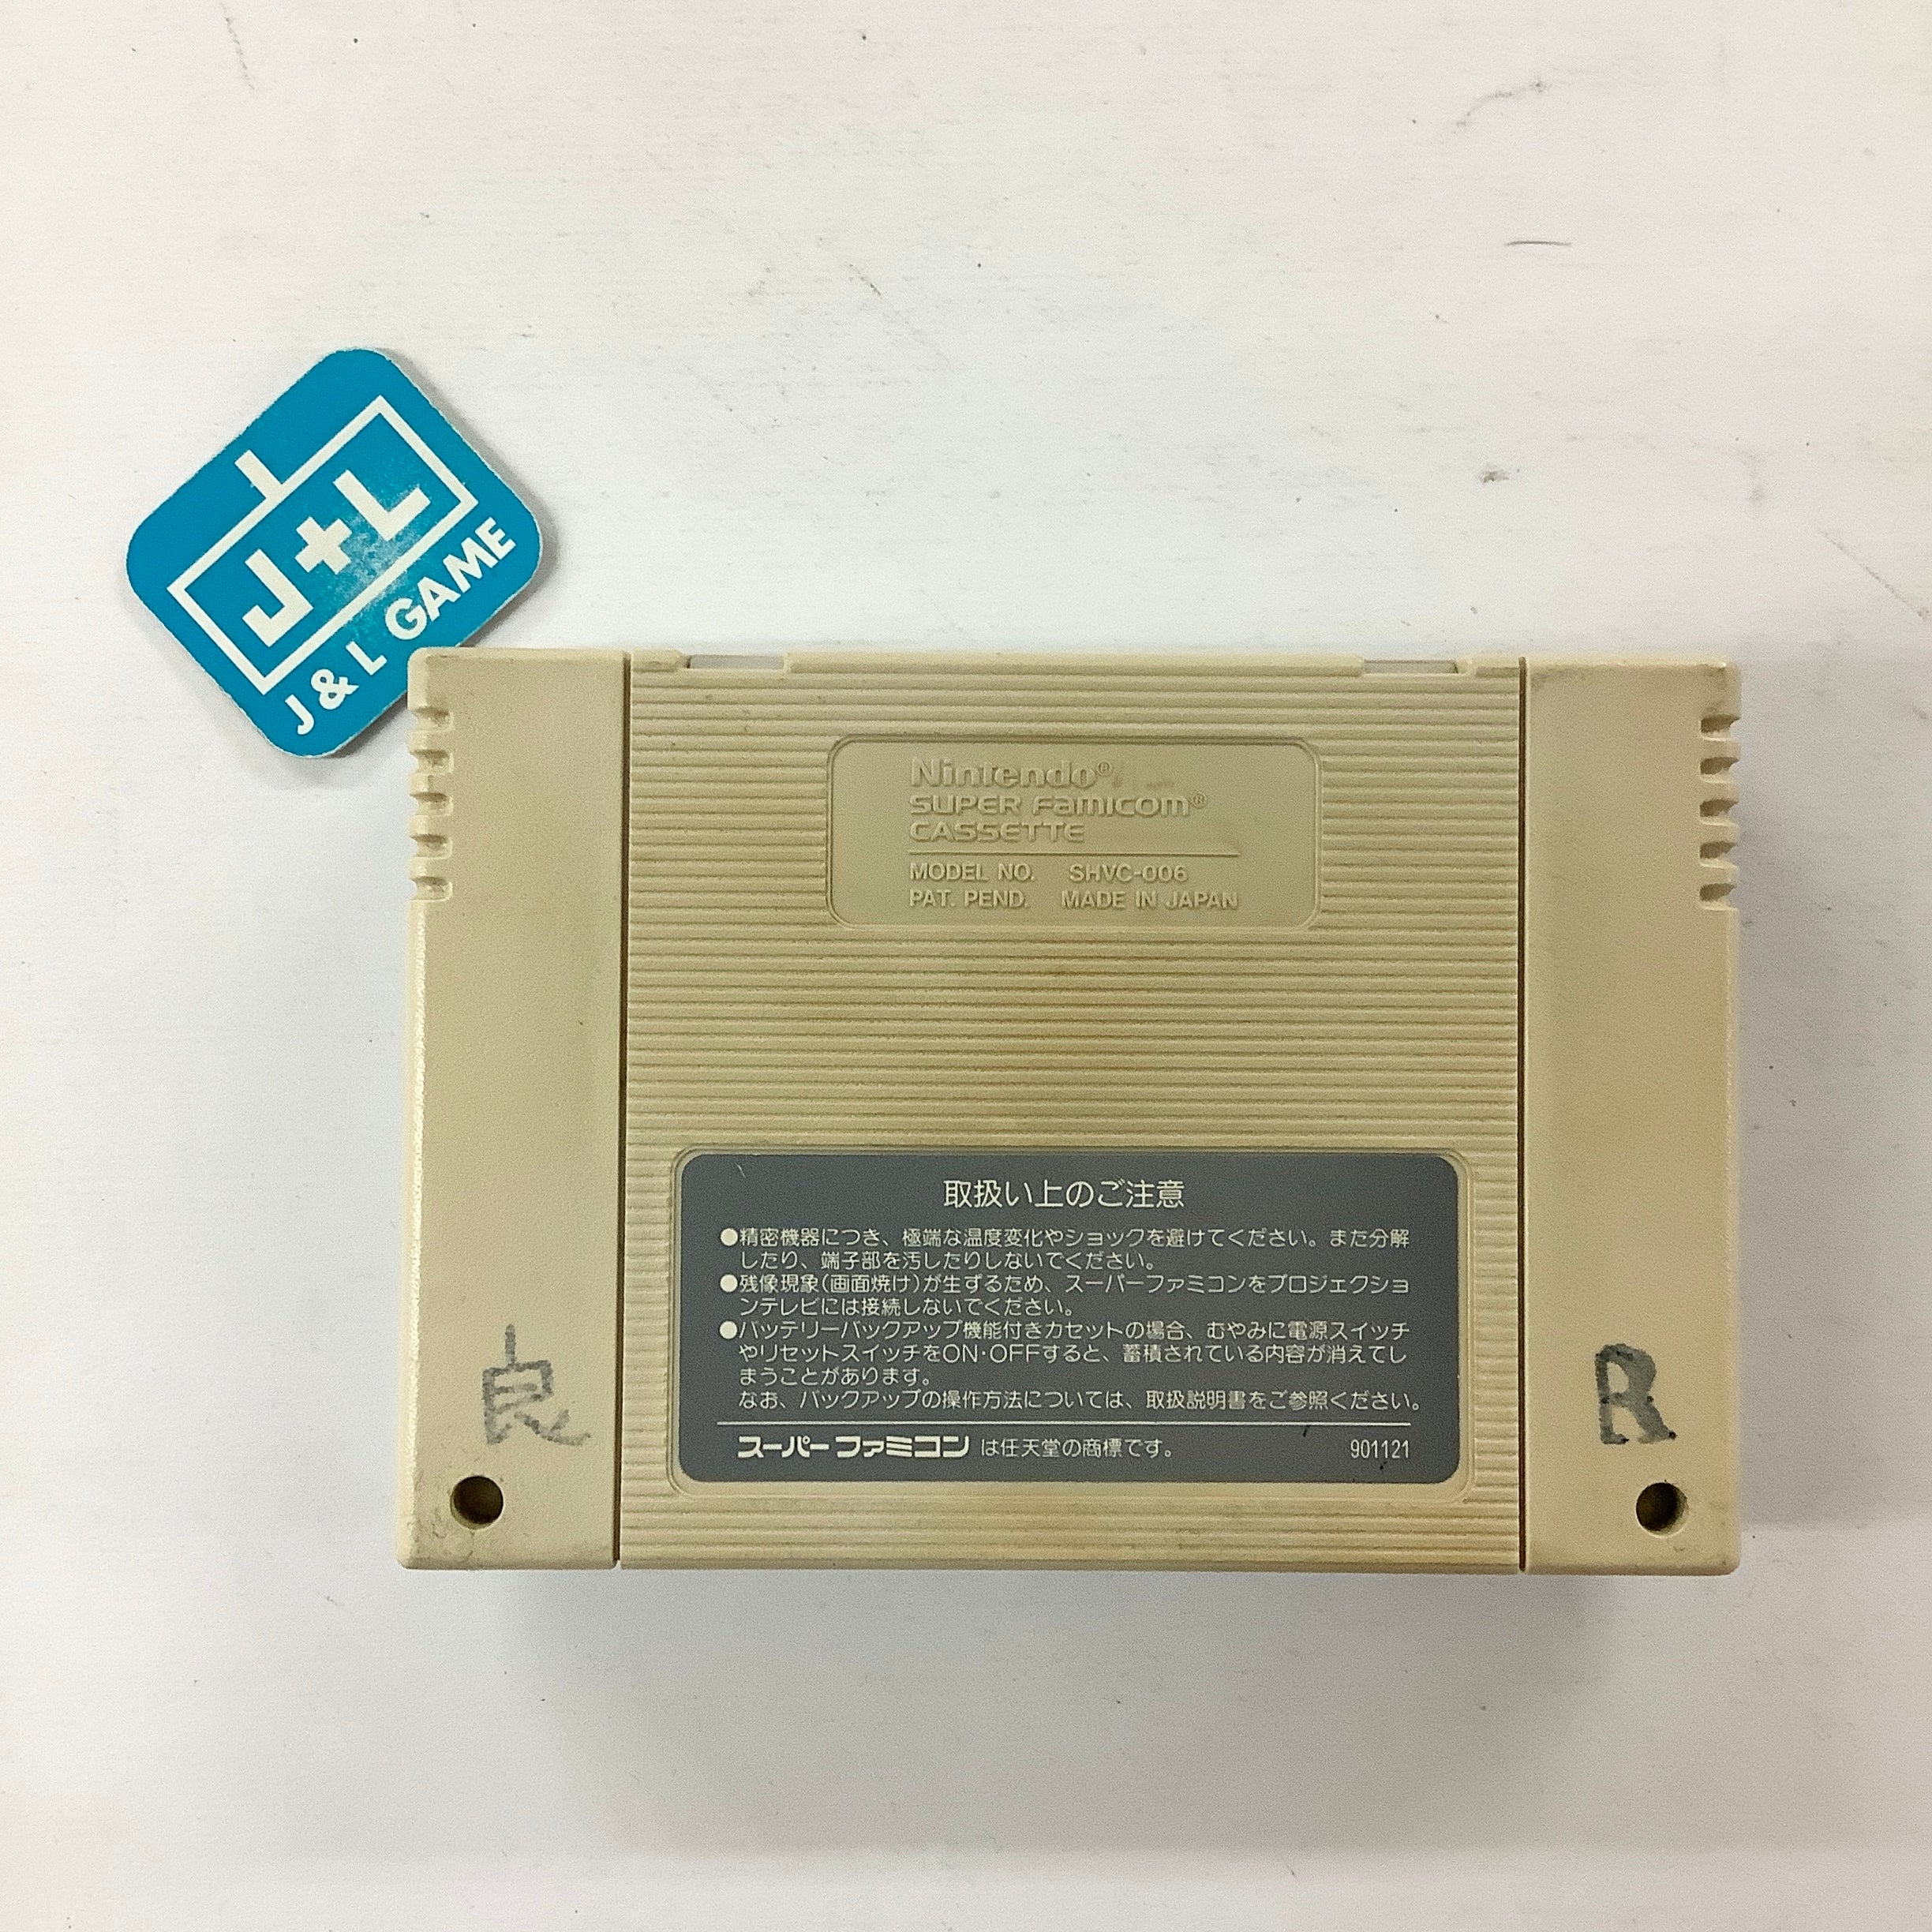 Final Fantasy IV - (SFC) Super Famicom [Pre-Owned] (Japanese Import) Video Games SquareSoft   